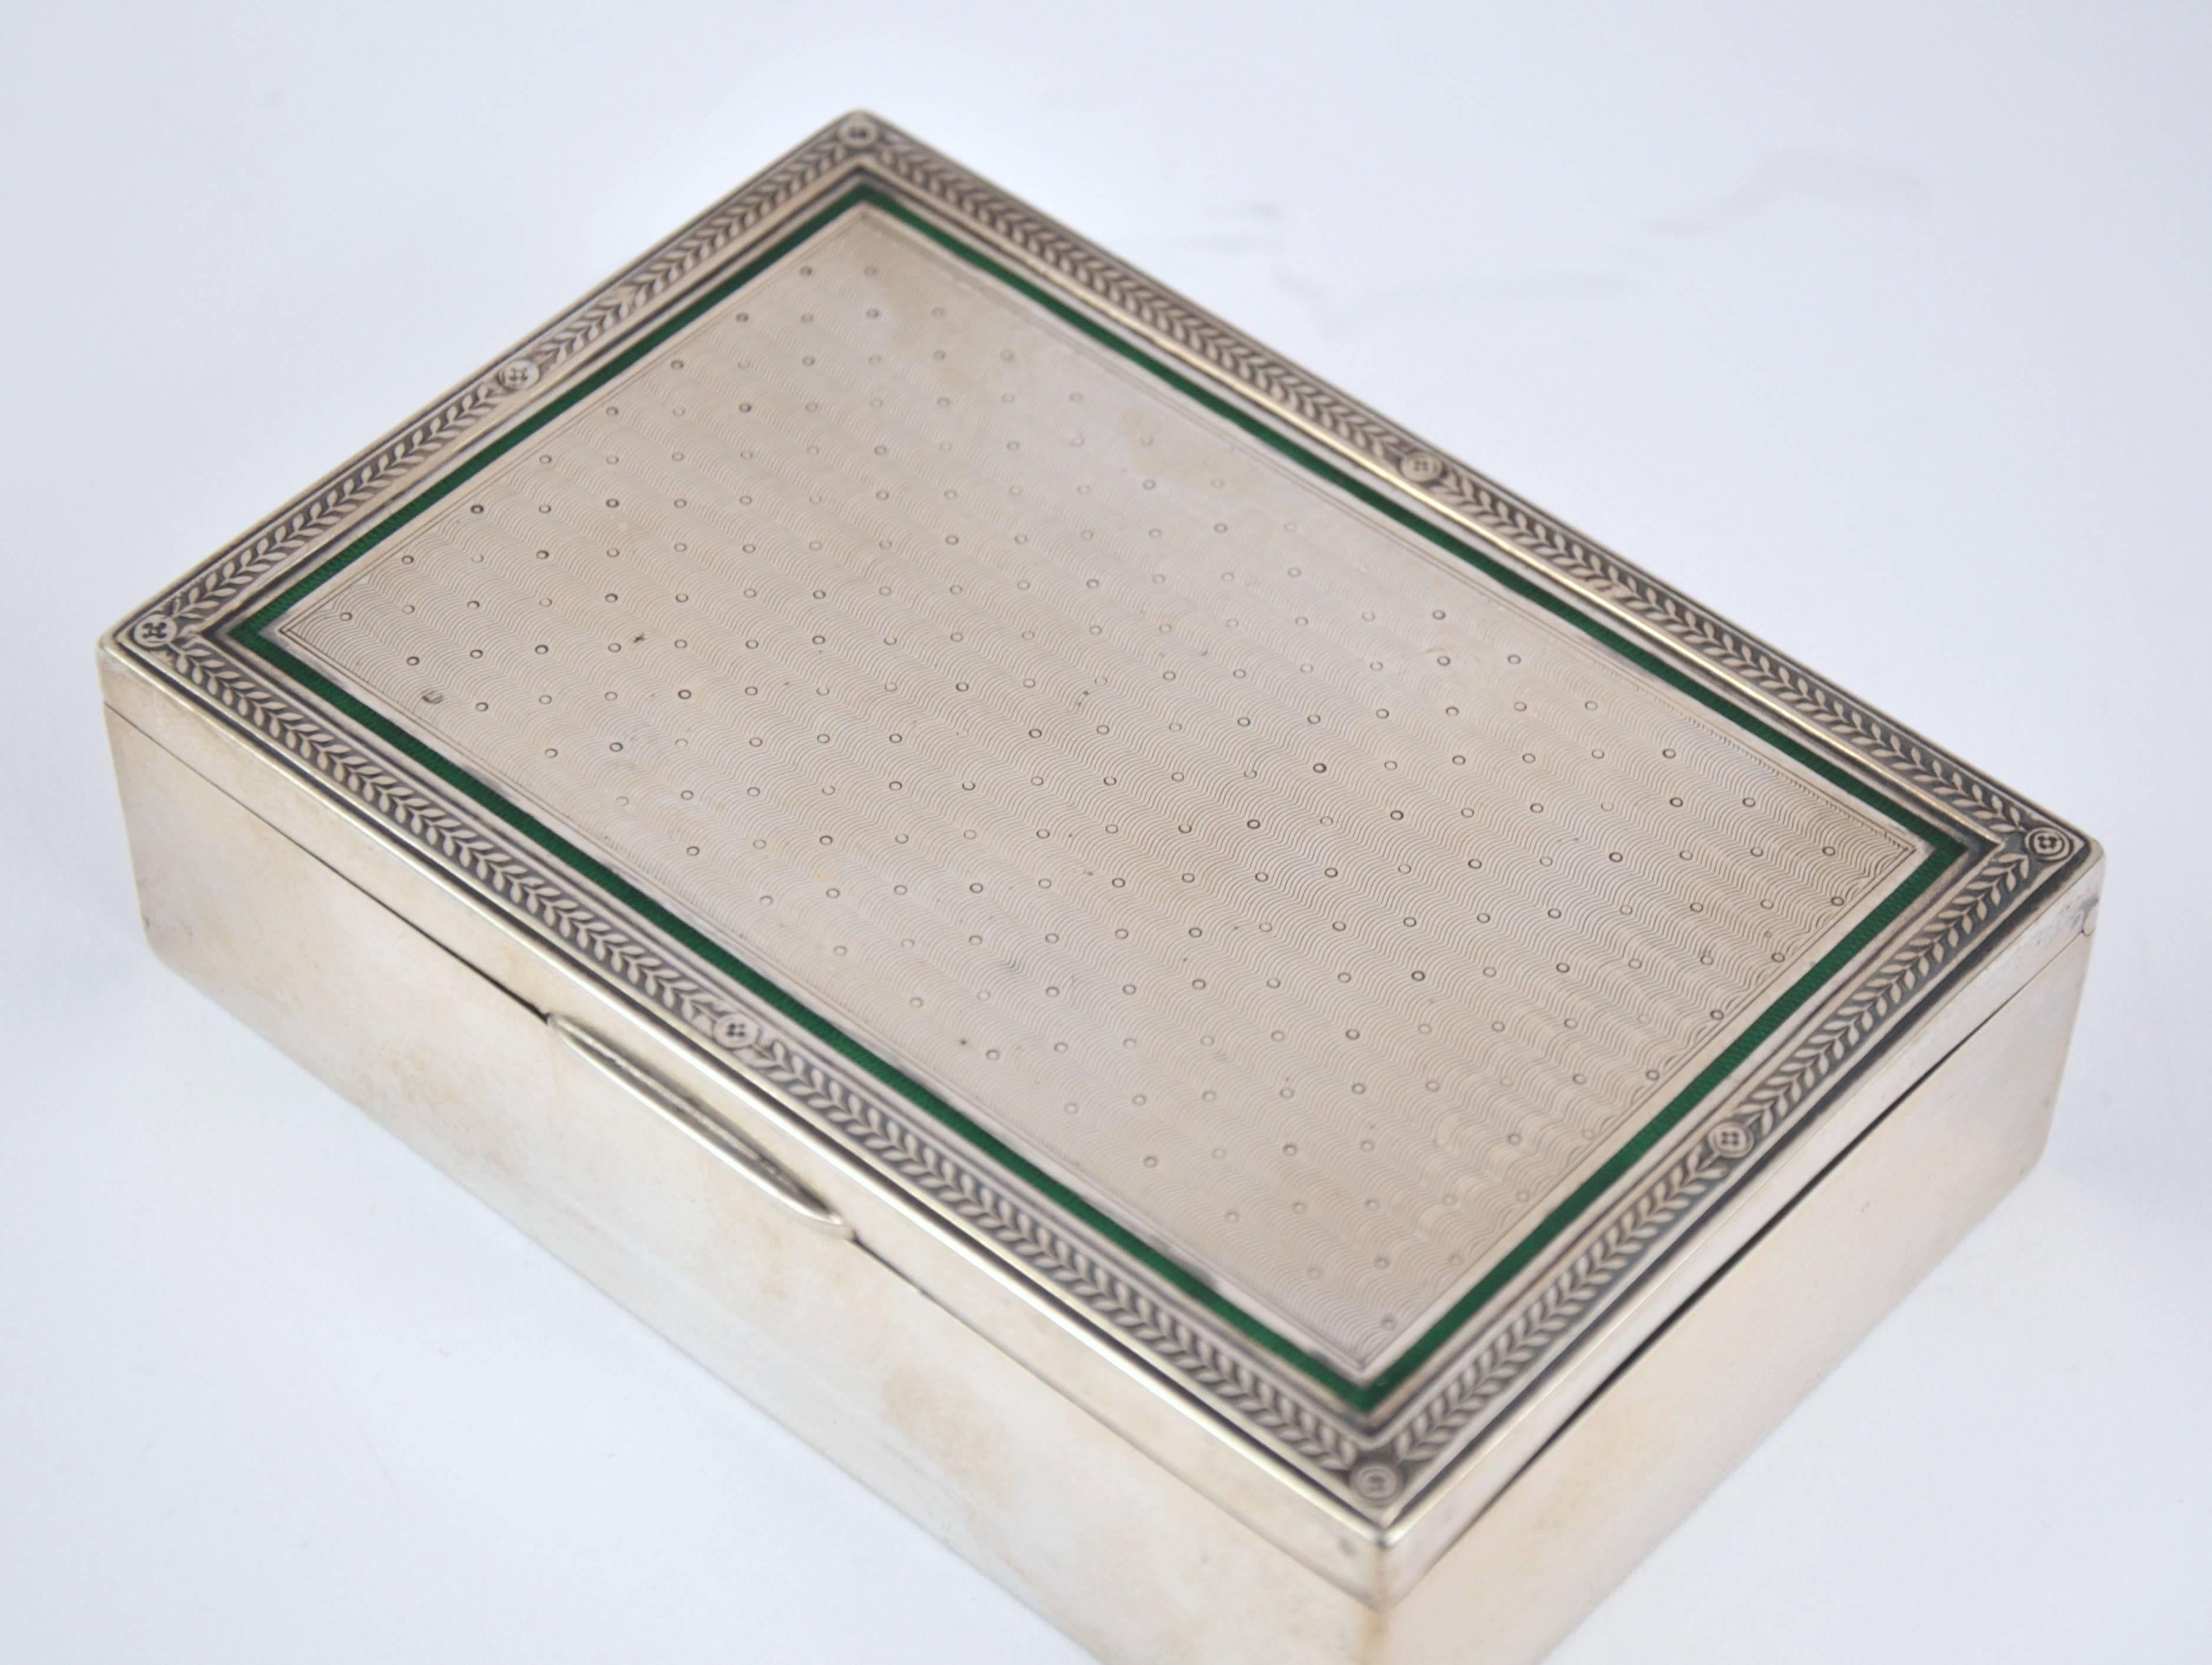 Georg Adam Scheid (act. 1858-1913) silver and green enamel cigarette box. Late 19th-early 20th century, Austria, Vienna. Silver 900/1000, enamel, wood.